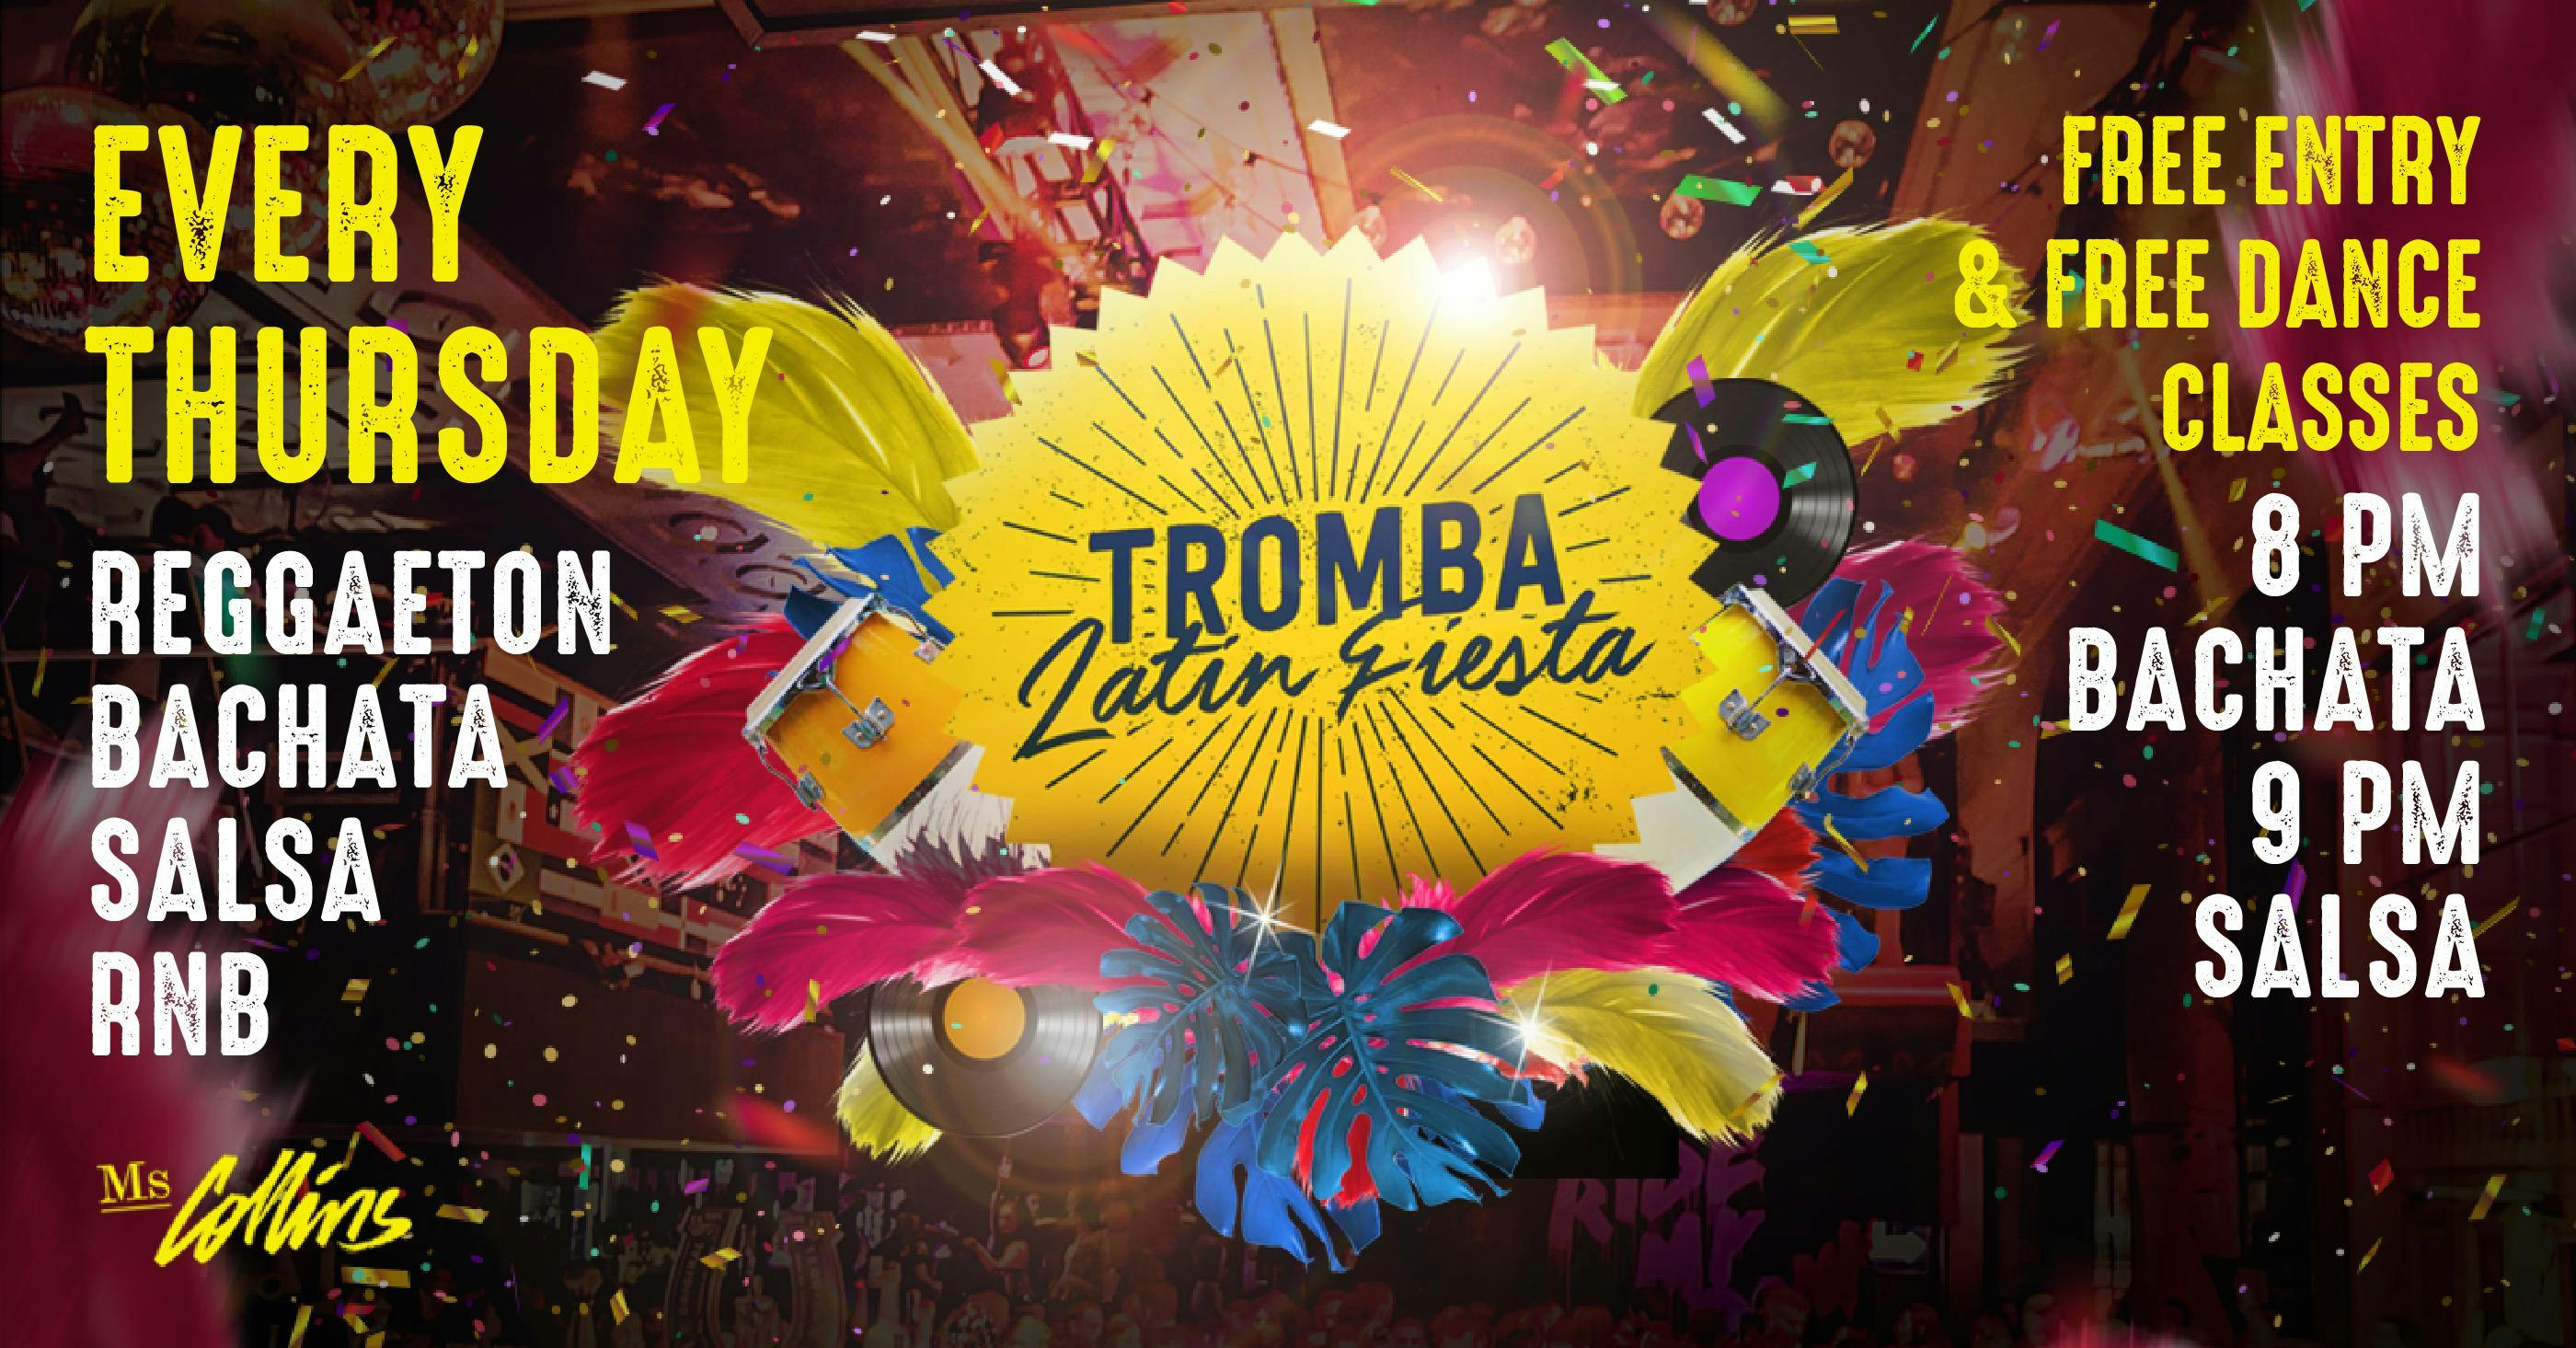 Tromba Latin Fiesta - Every Thursday